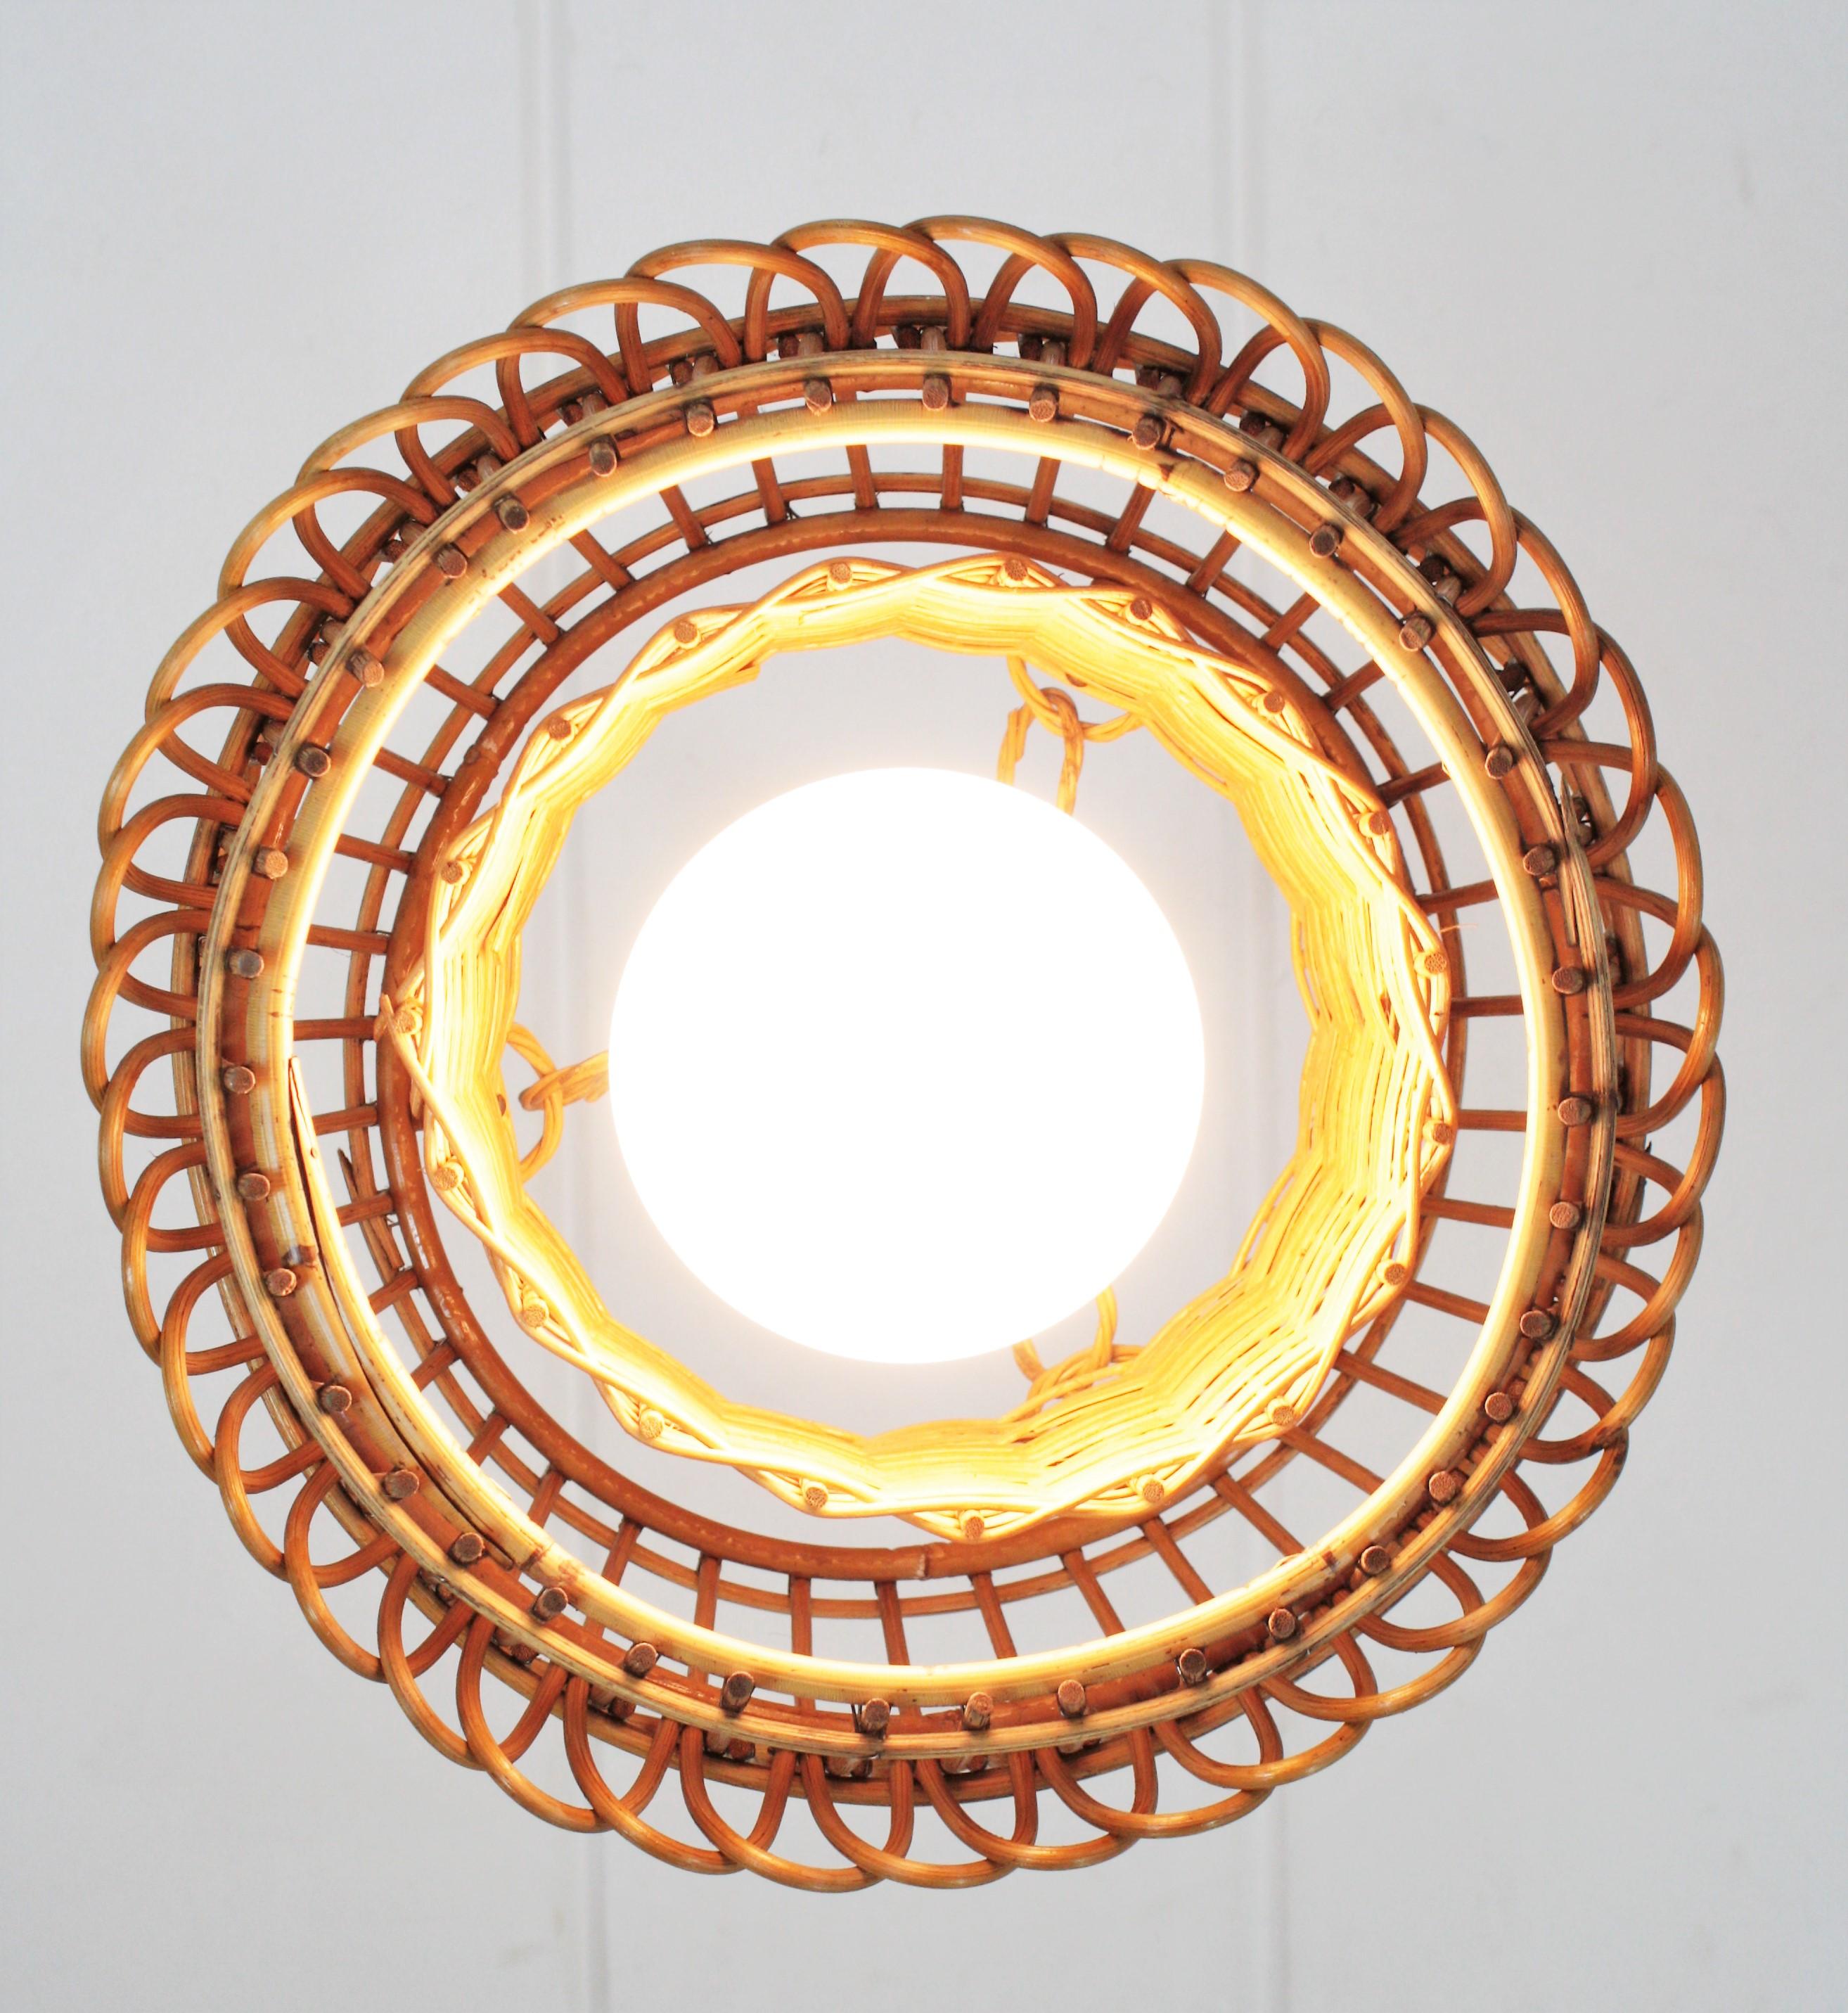 Spanish Modernist Rattan Pendant Lamp / Hanging Light with Woven Wicker Shade 8